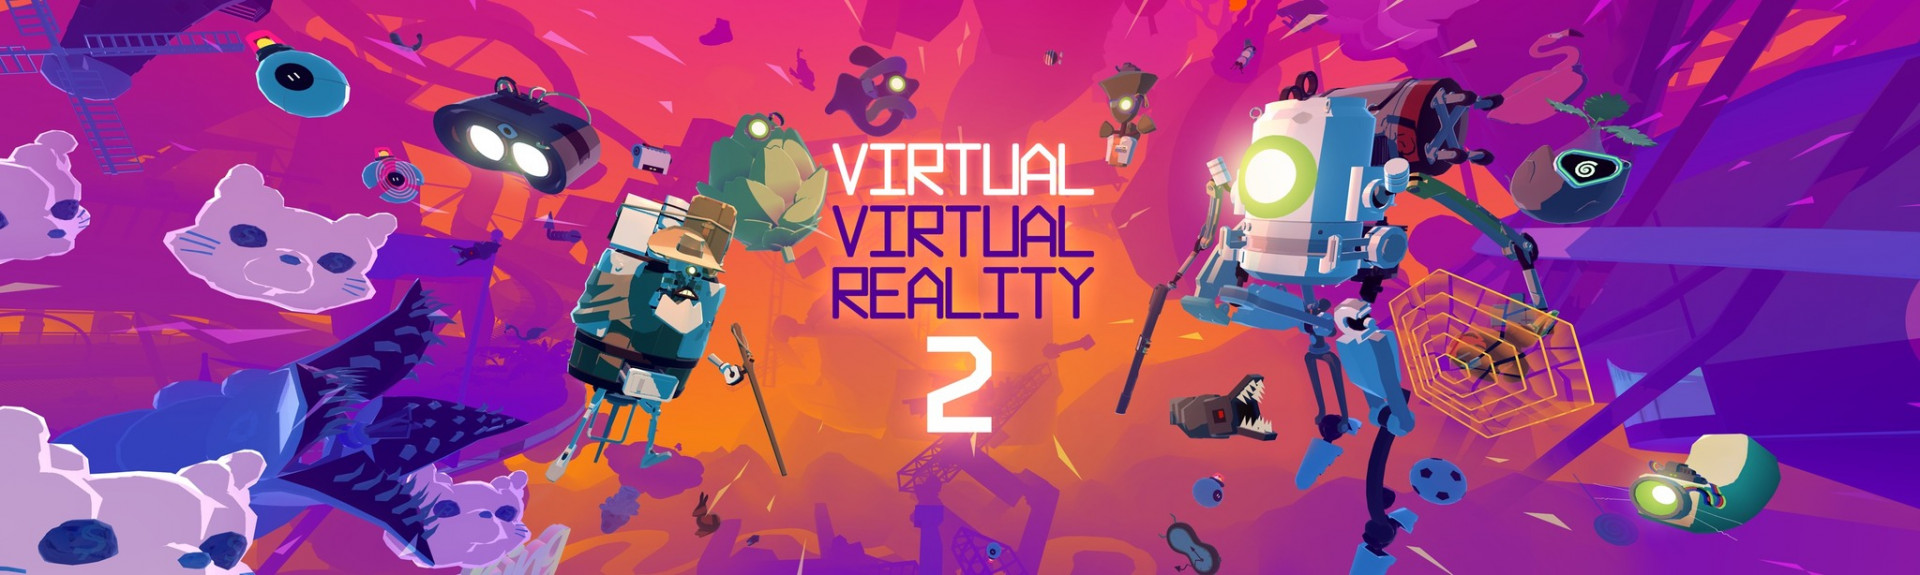 Virtual Virtual Reality 2: ANÁLISIS